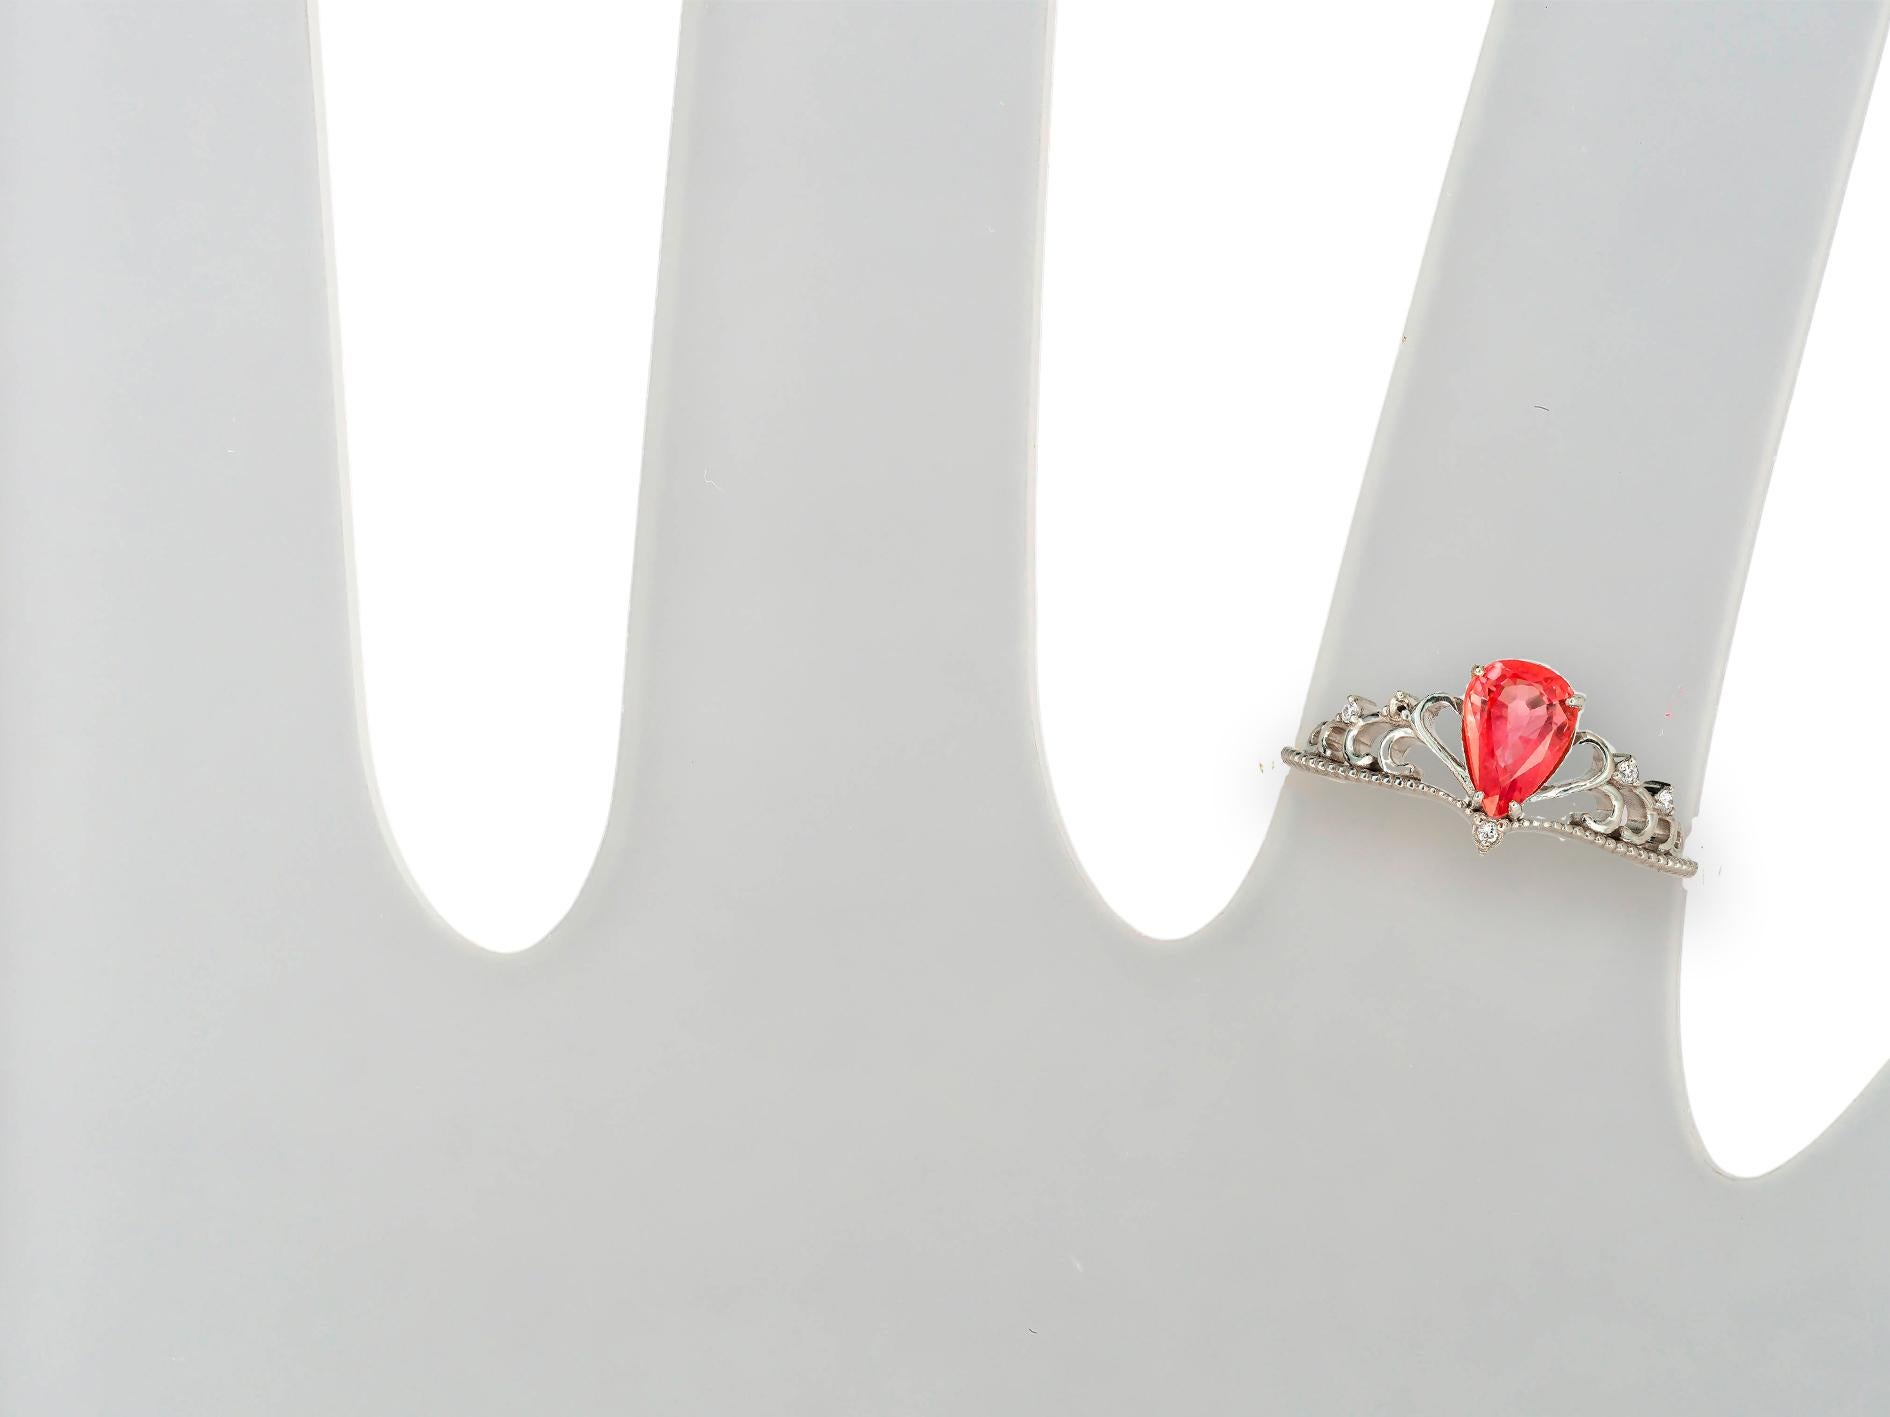 For Sale:  14 Karat Gold Tiara Ring with Pink Tourmaline and Diamonds. 11